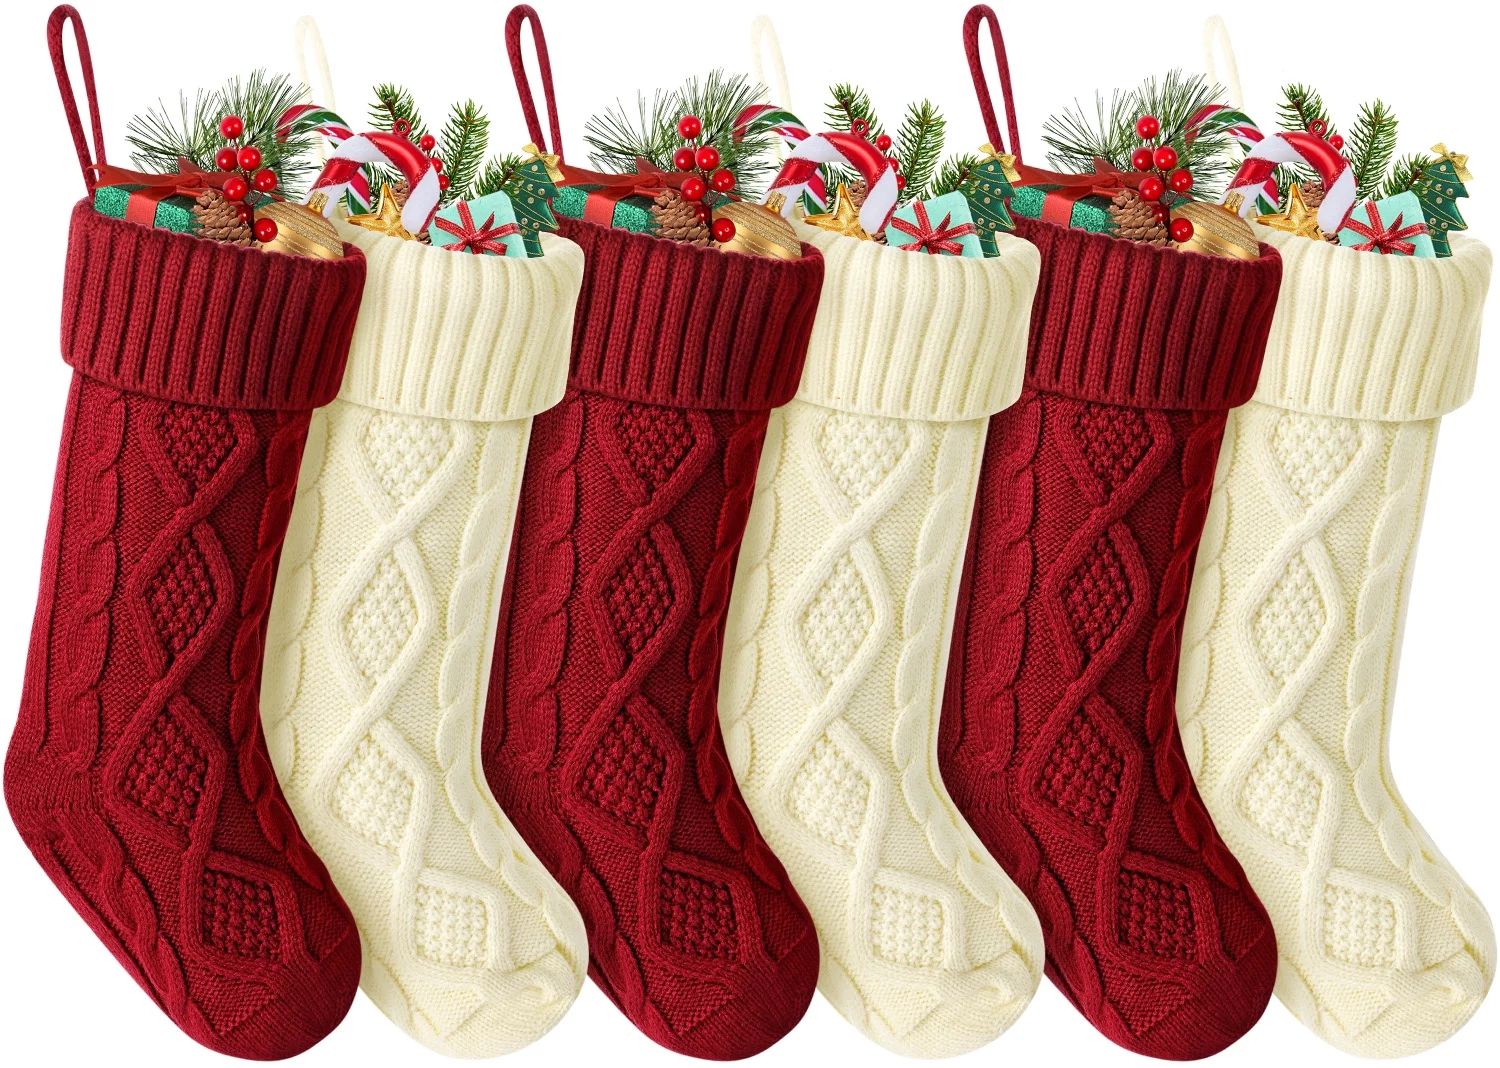 Ayieyill 6pcs Christmas Stockings Large Knitted Xmas Stockings 18 Inches Fireplace Hanging Stocki... | Walmart (US)